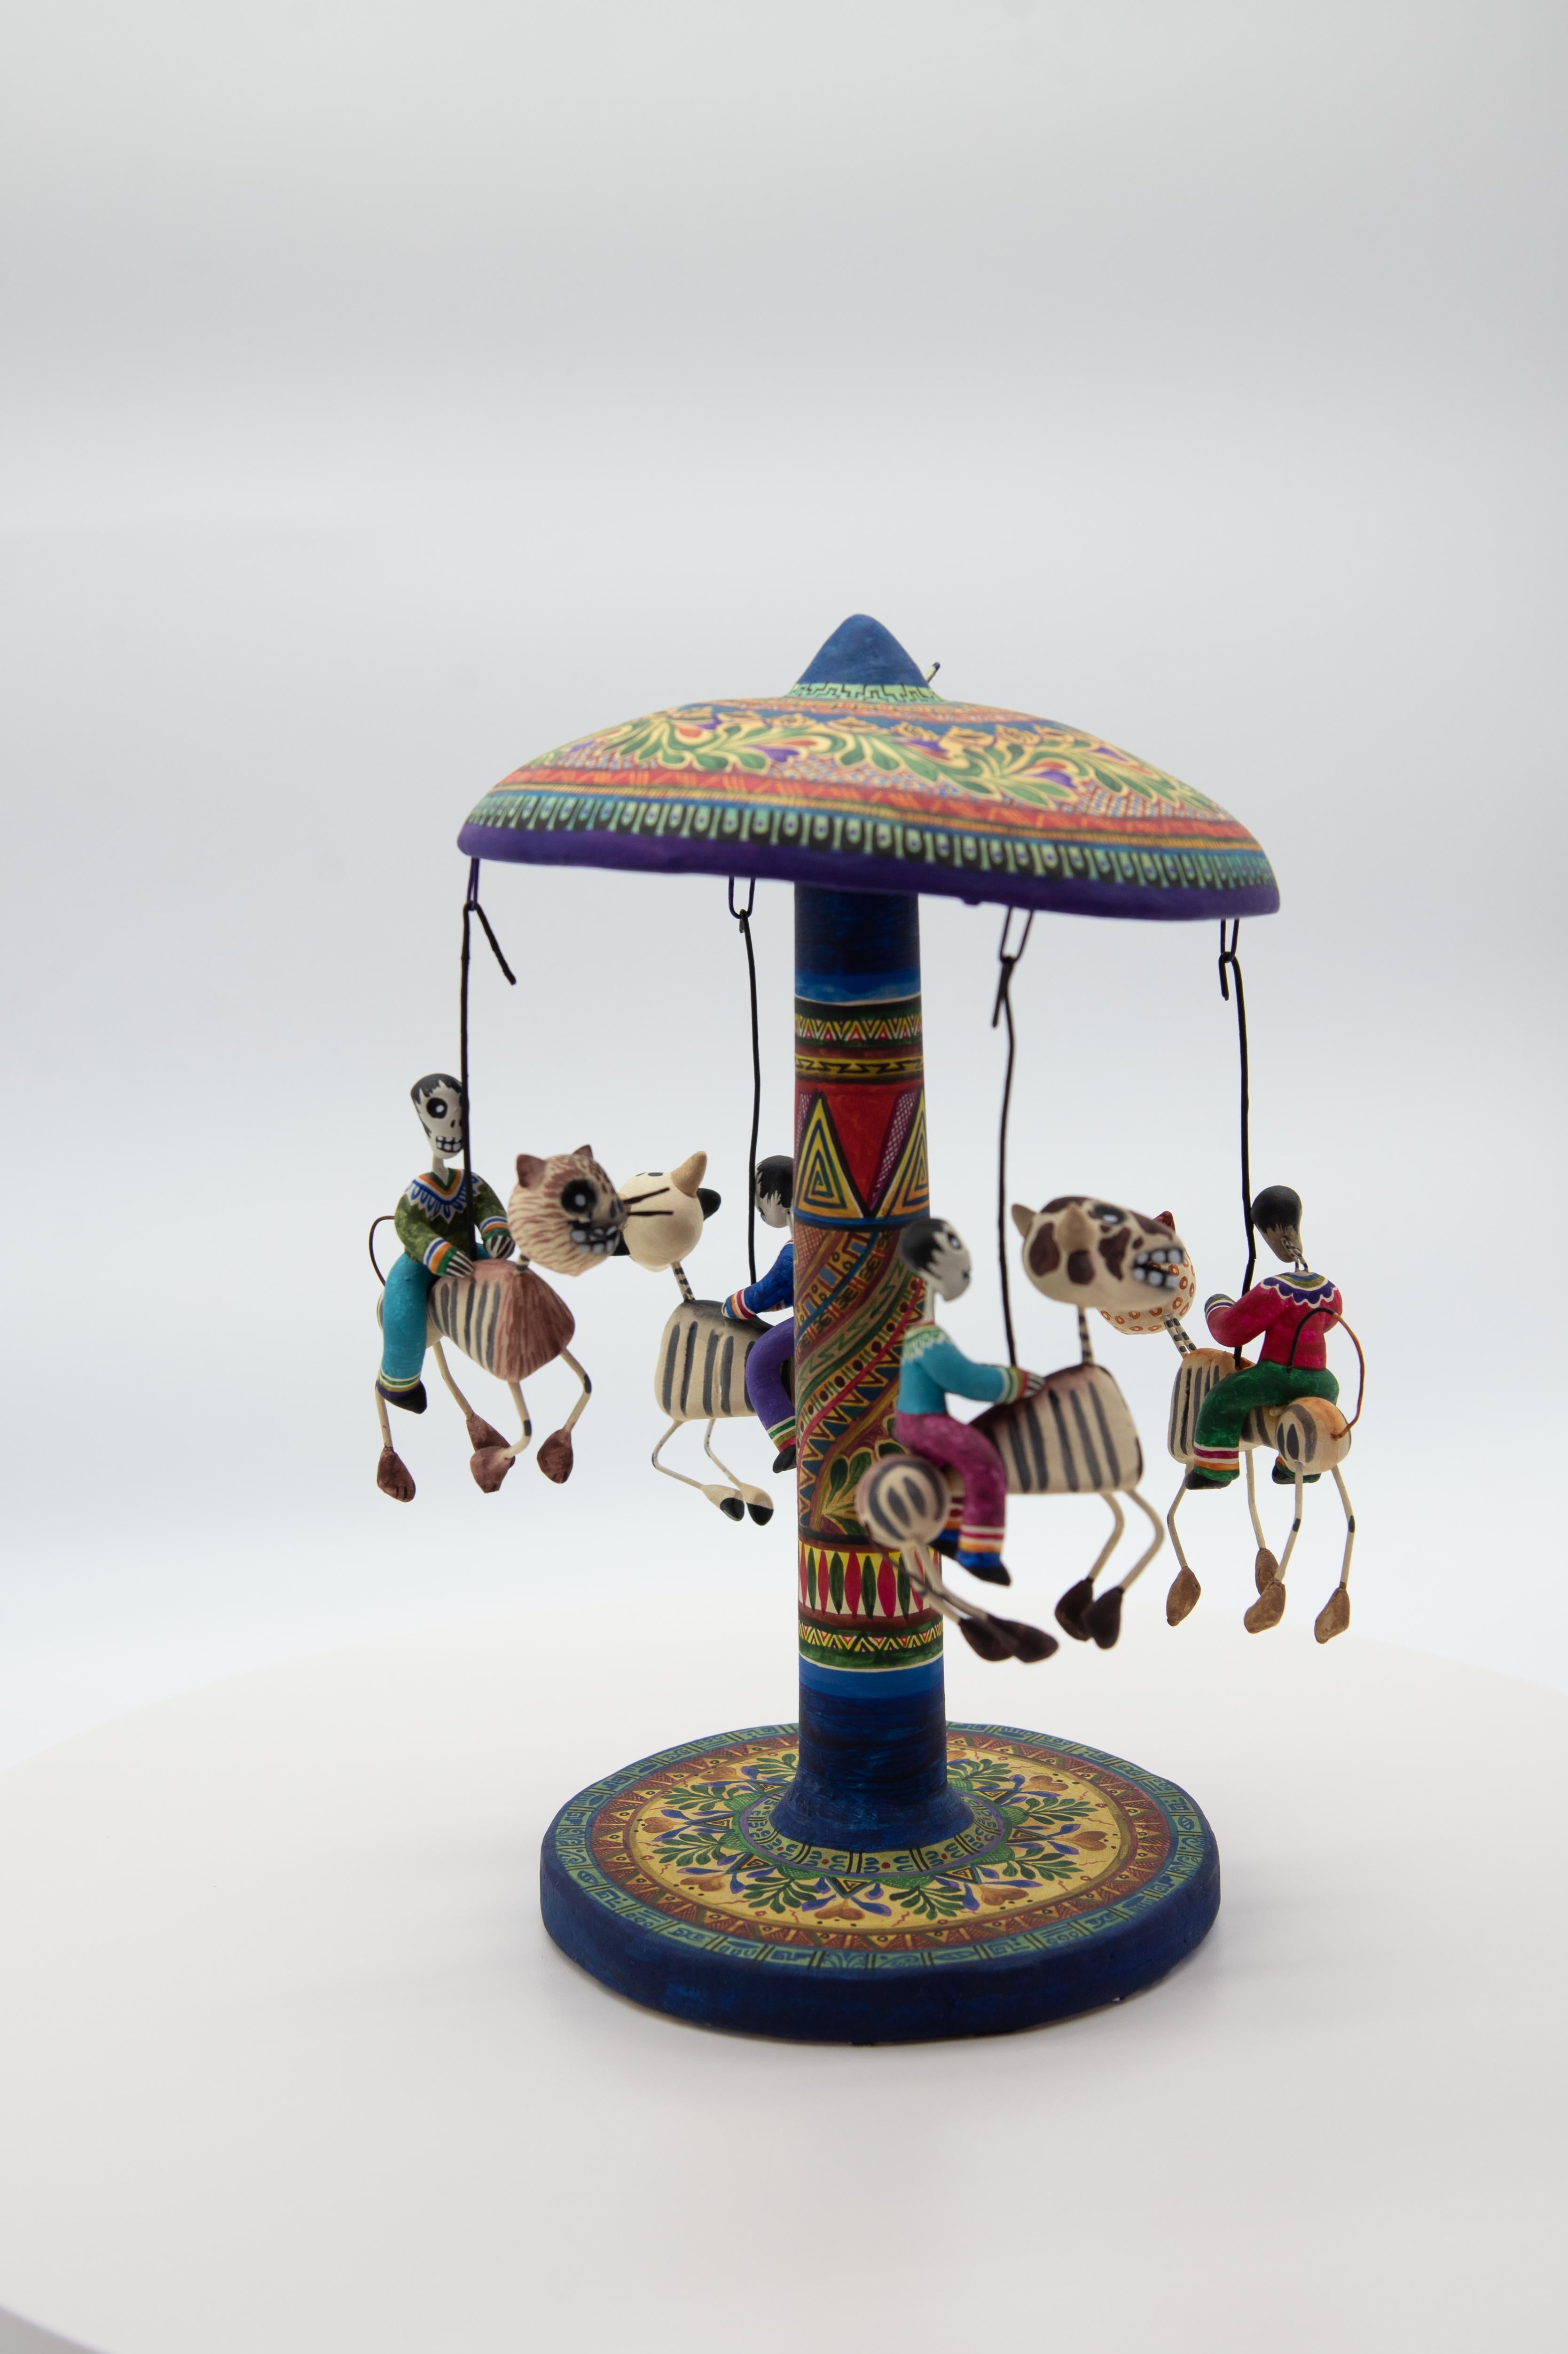 Carousel Day of the Dead Ceramic Mexican Folk Art by Familia Castillo  For Sale 8